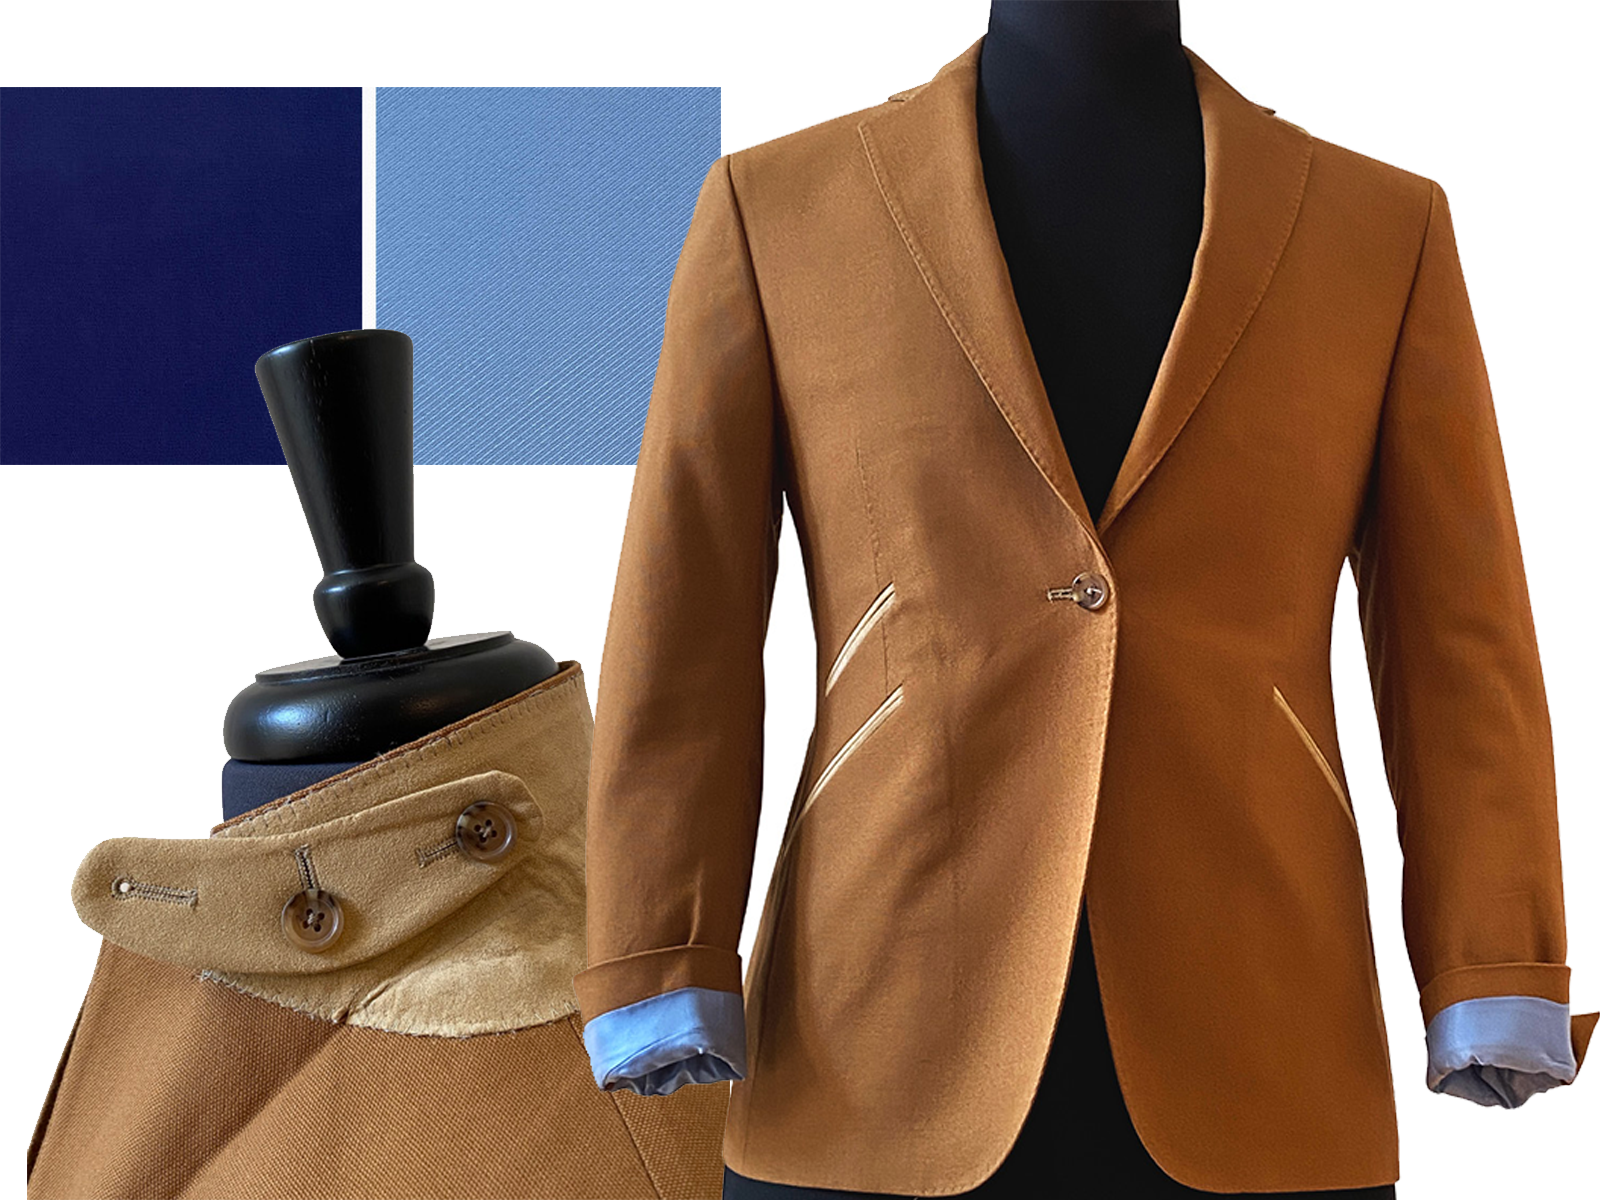 Ethan James Green for Louis Vuitton Twist Bag Winter 2022 Campaign